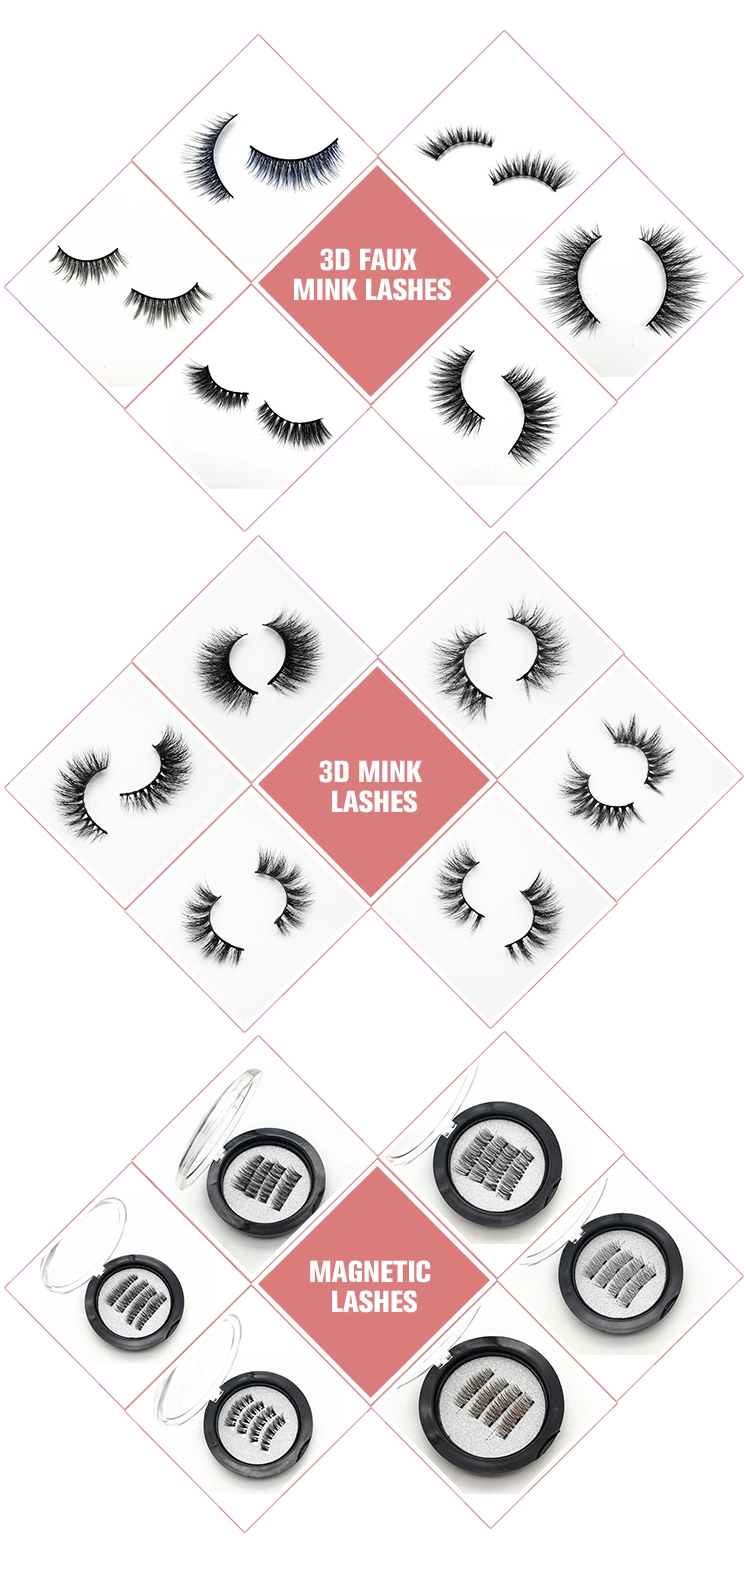 Top quality 3D mink false eyelashes